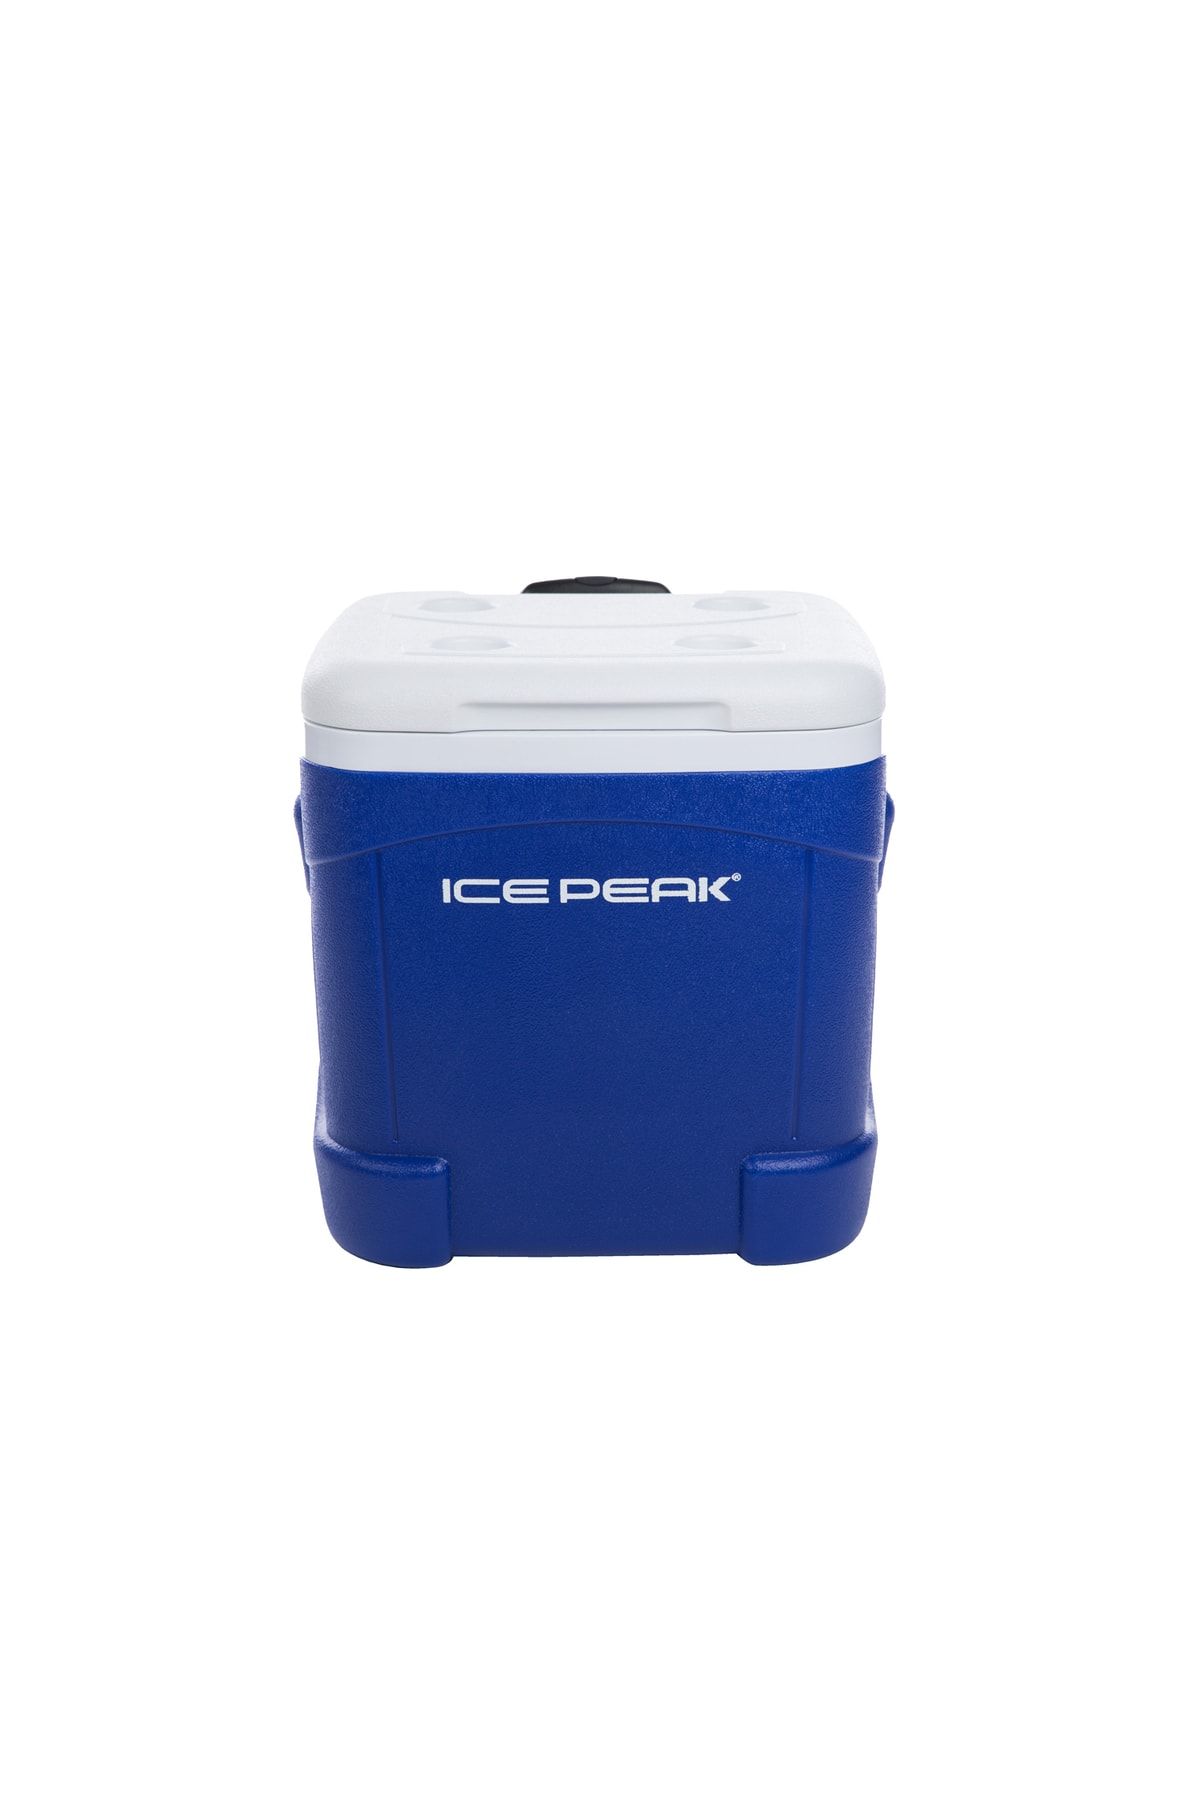 Icepeak Icecube Tekerlekli Buzluk 55 Litre-lacivert